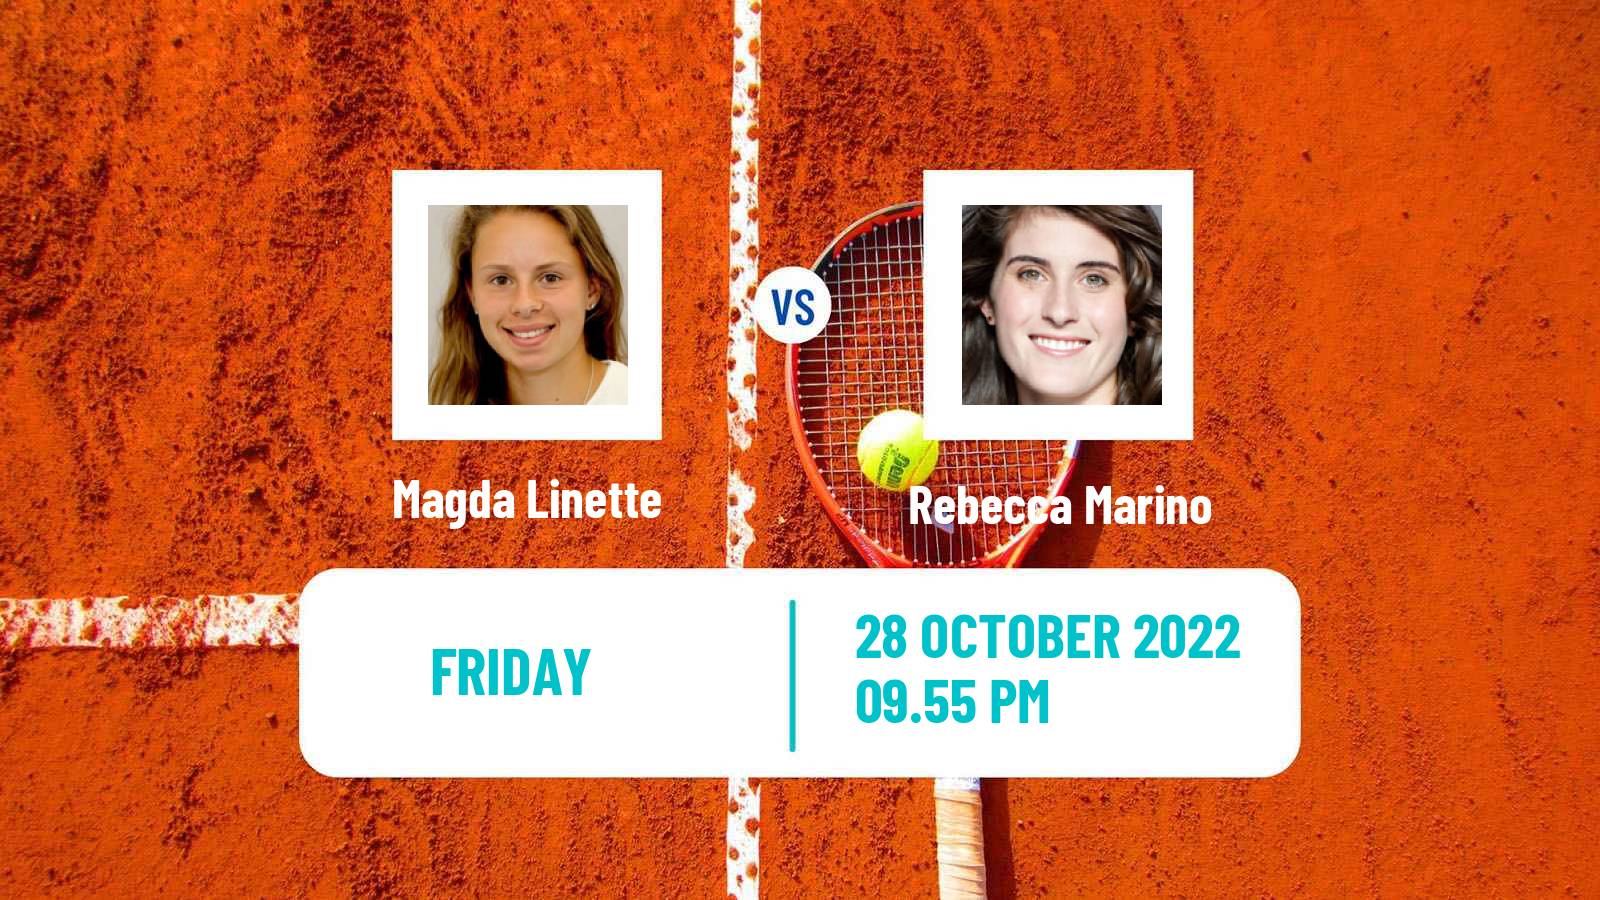 Tennis ATP Challenger Magda Linette - Rebecca Marino